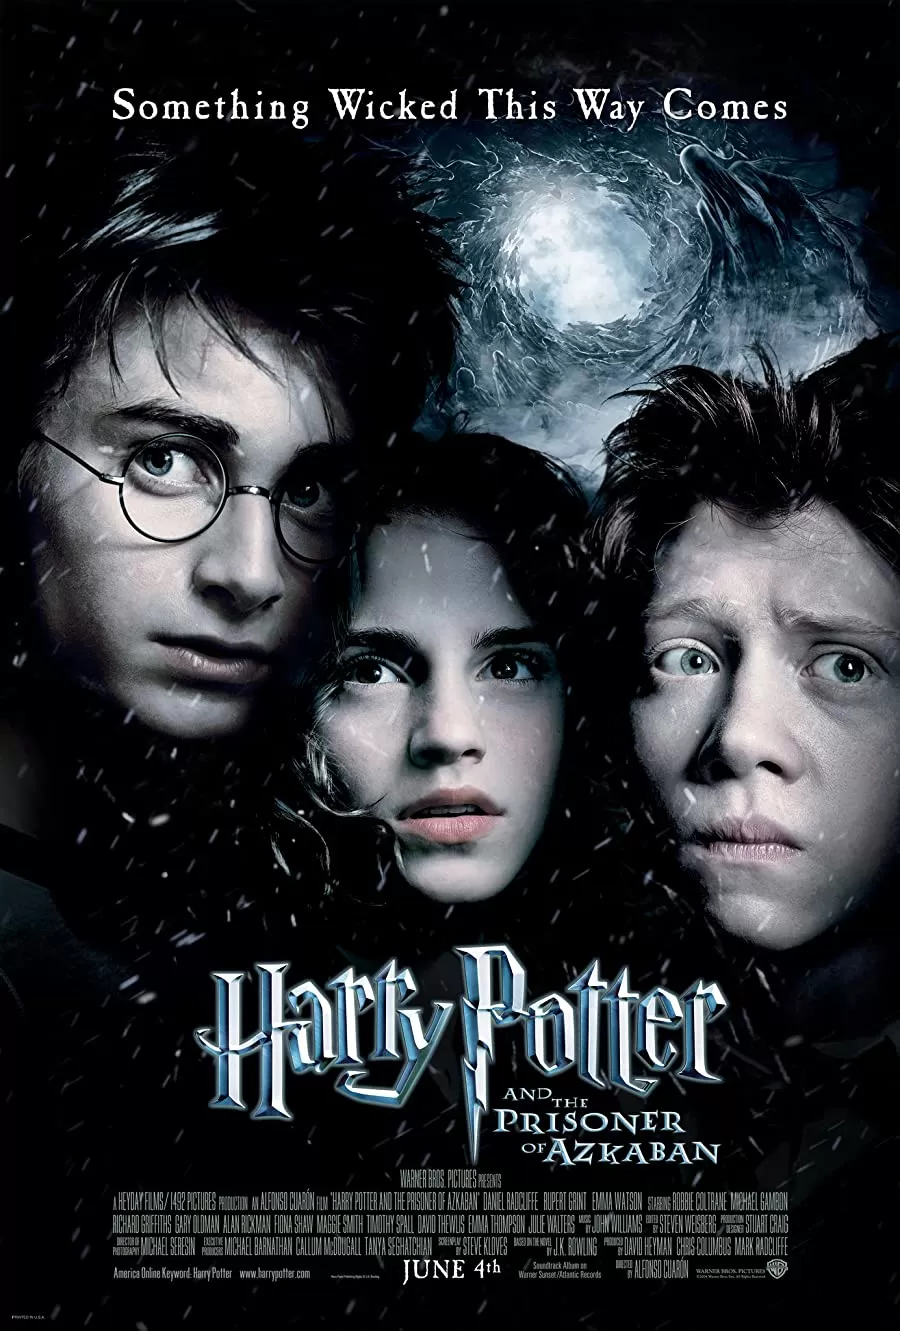 فیلم Harry Potter and the Prisoner of Azkaban 2004